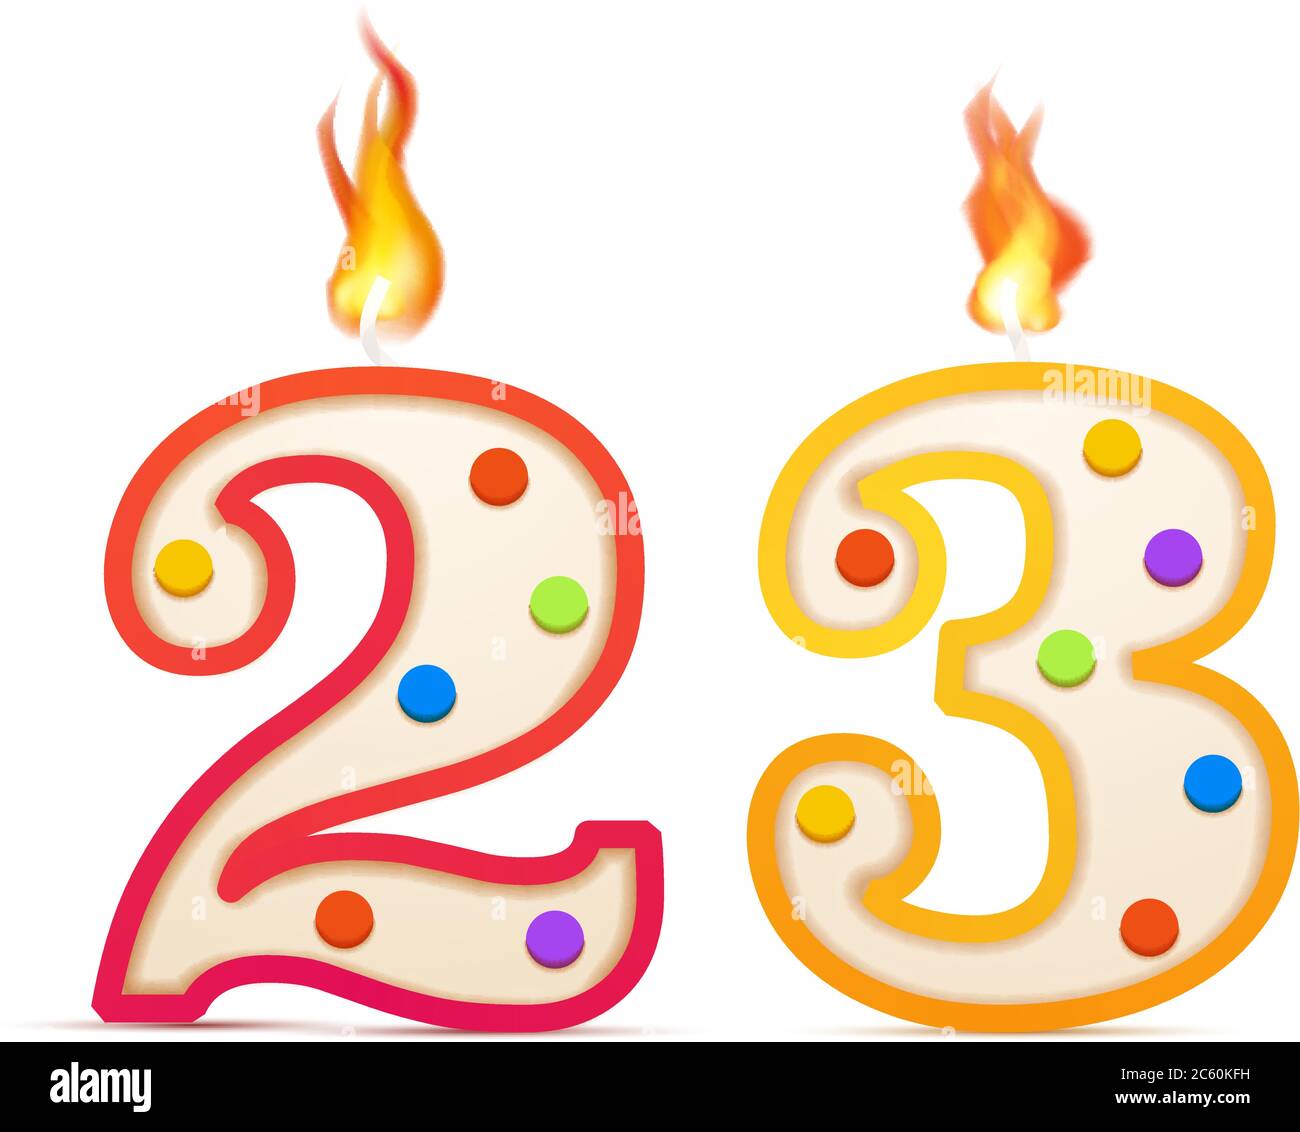 23 and Football Birthdays - Numberphile 